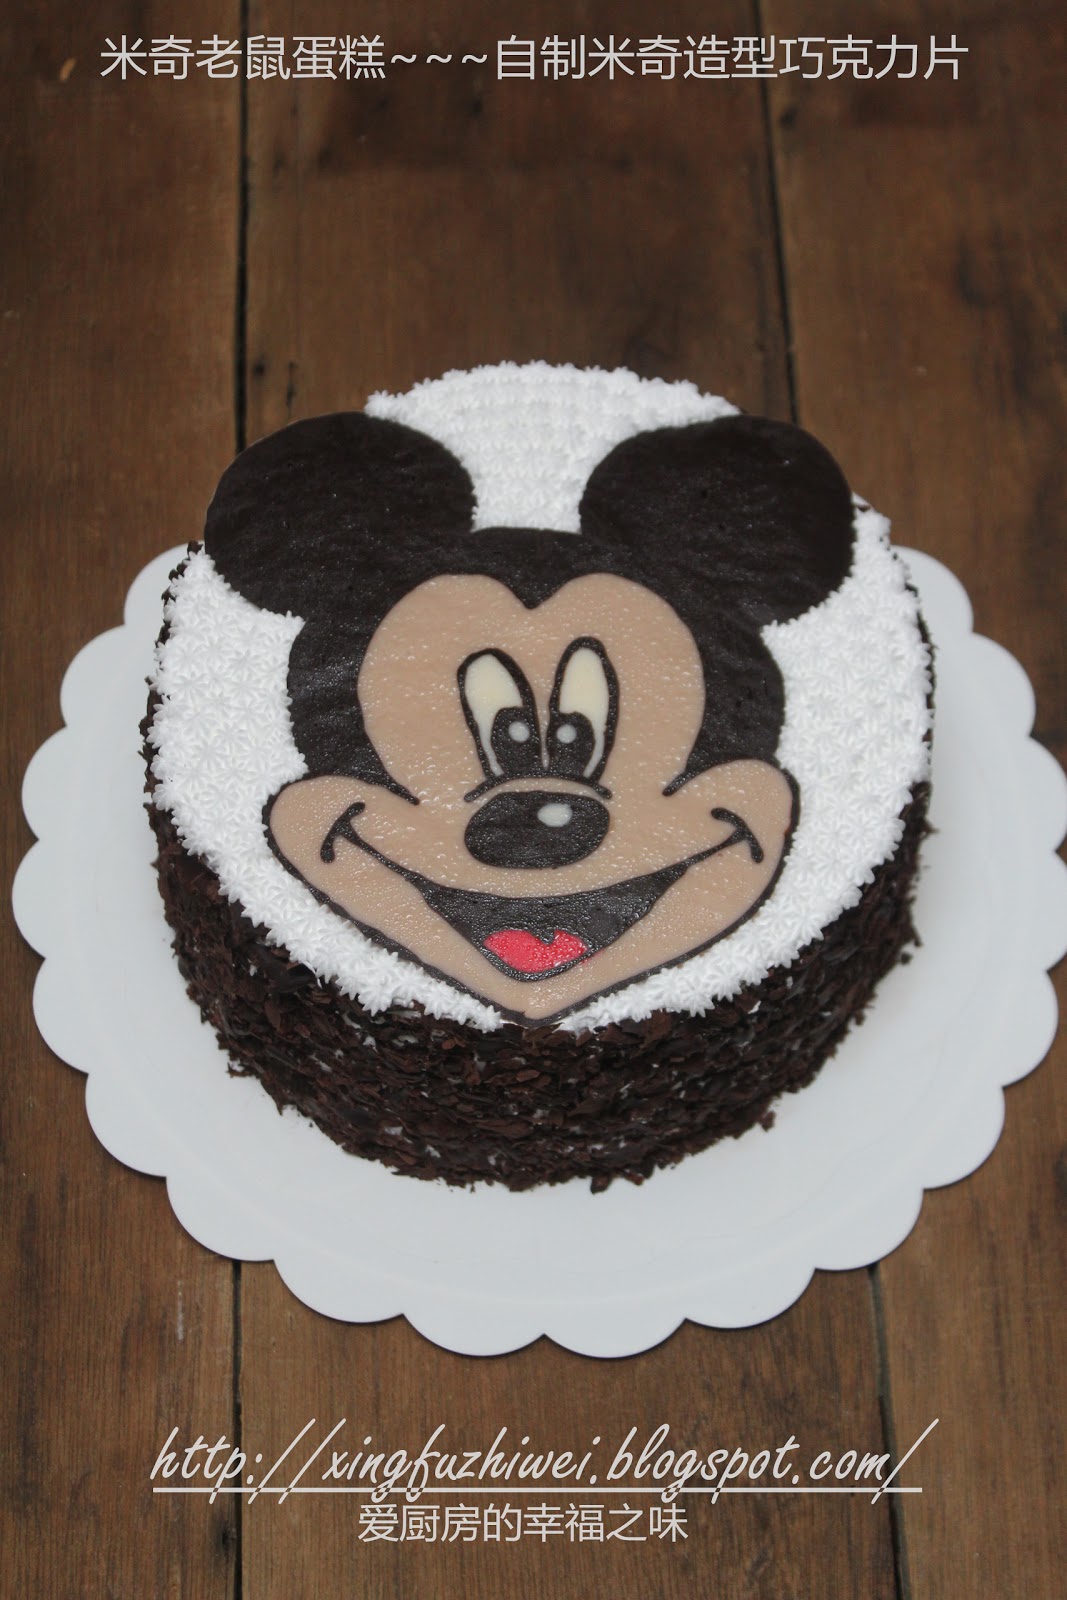 AppleBee Cake Boutique : Mickey and Friends Cake & Cupcakes 米奇老鼠蛋糕和杯子蛋糕组合